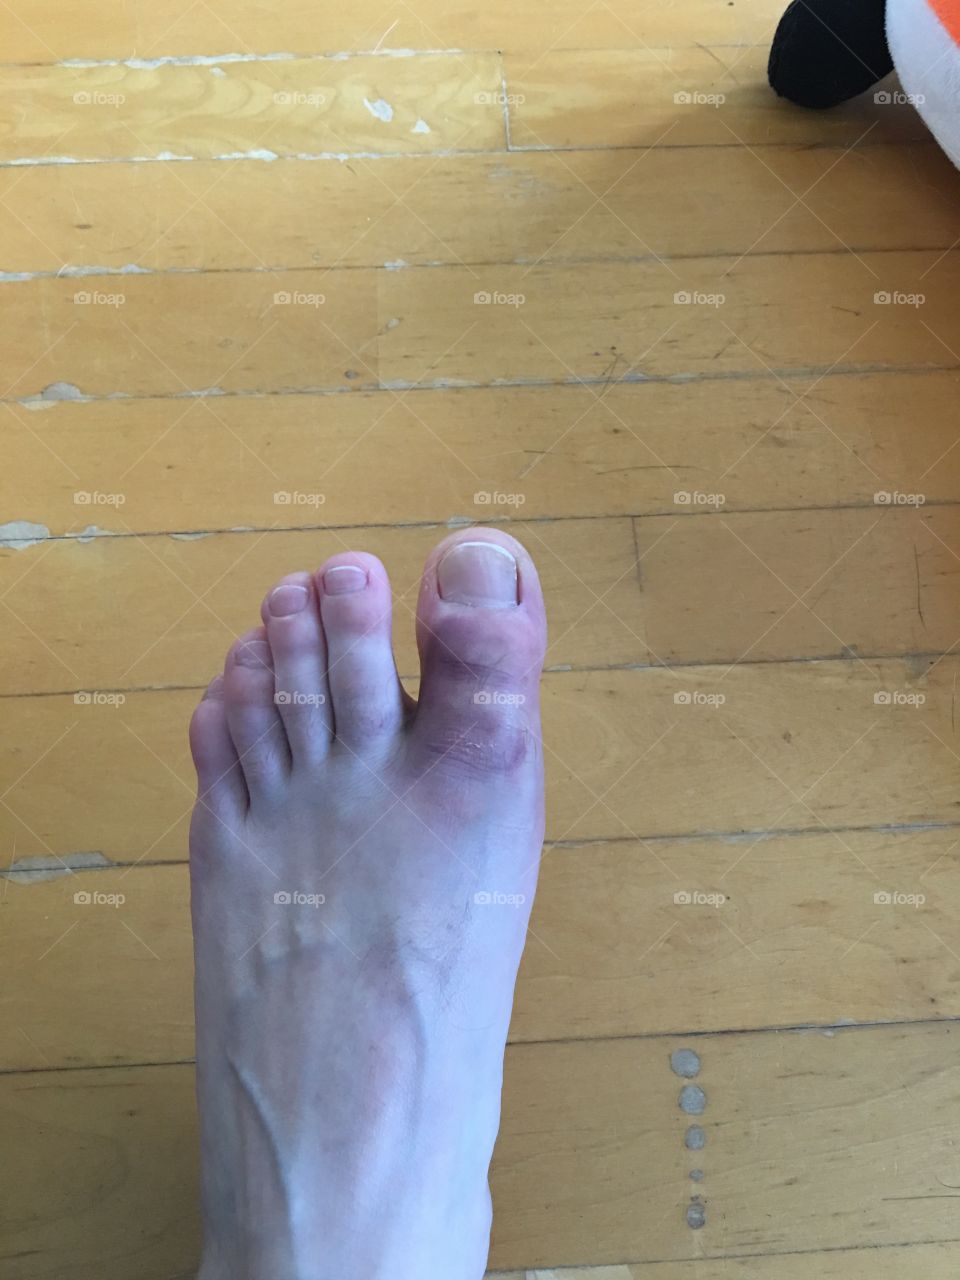 Foot injury 